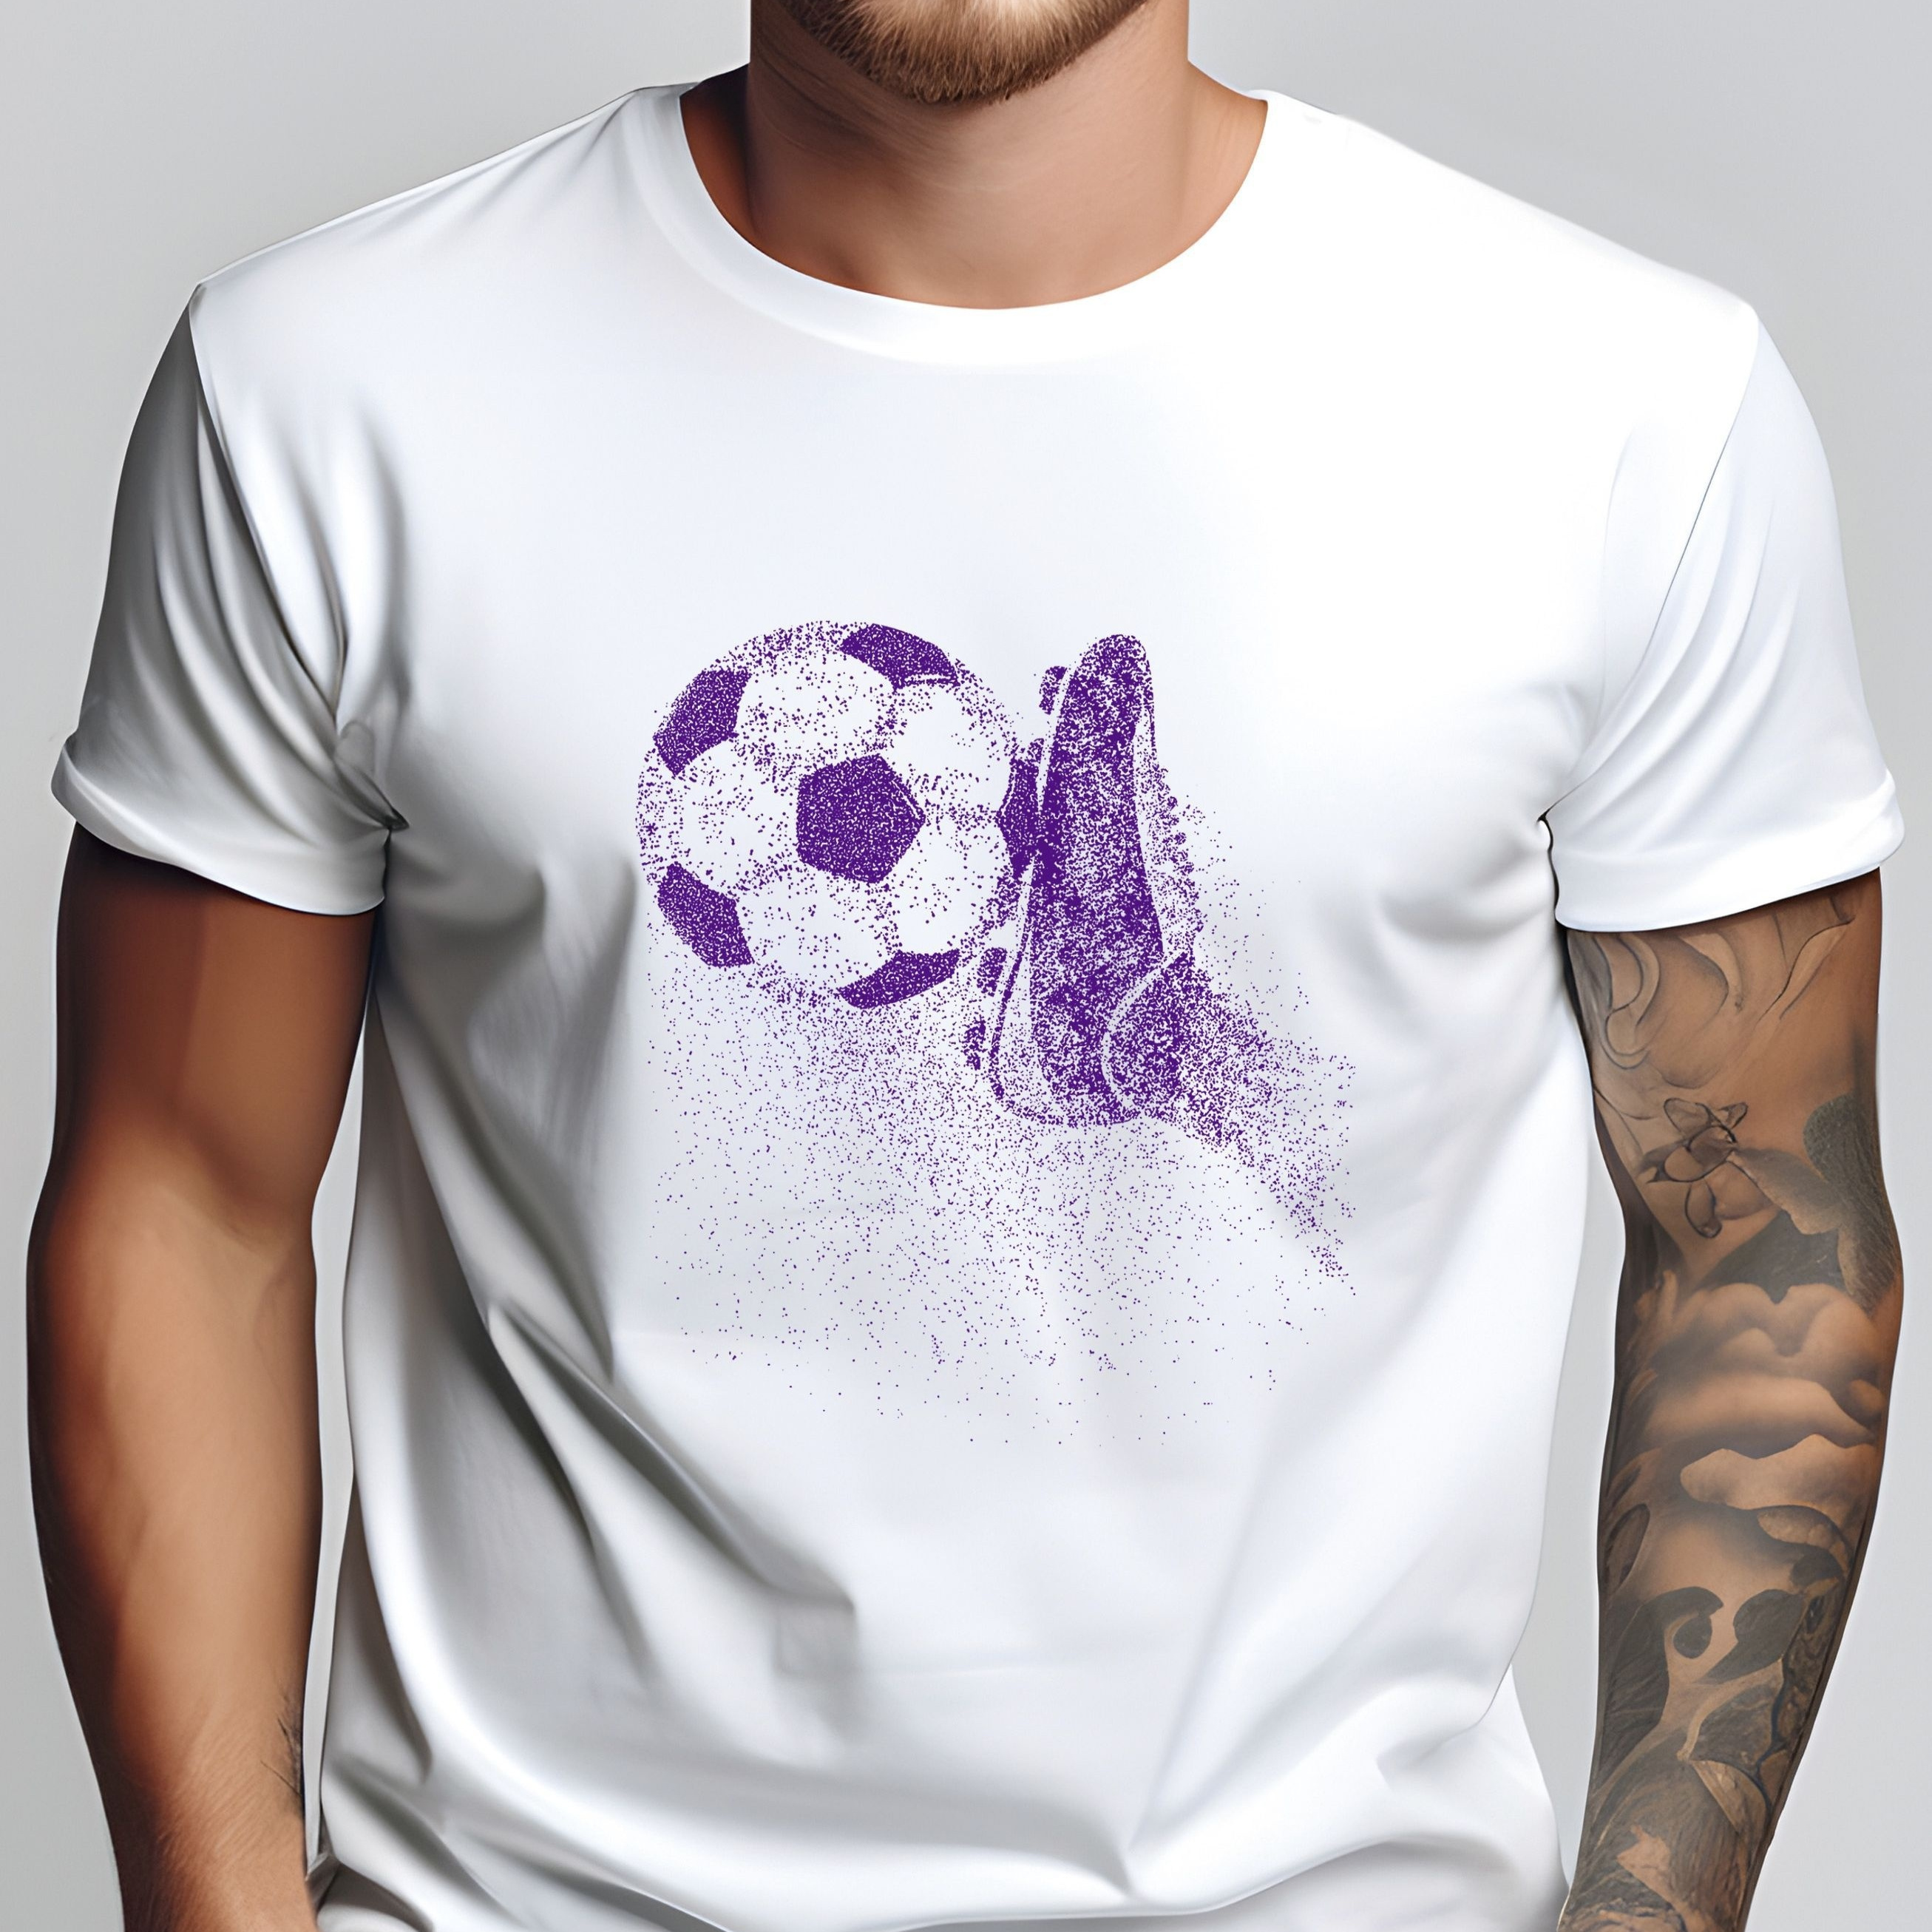 

Soccer Print Tee Shirt, Tees For Men, Casual Short Sleeve T-shirt For Summer